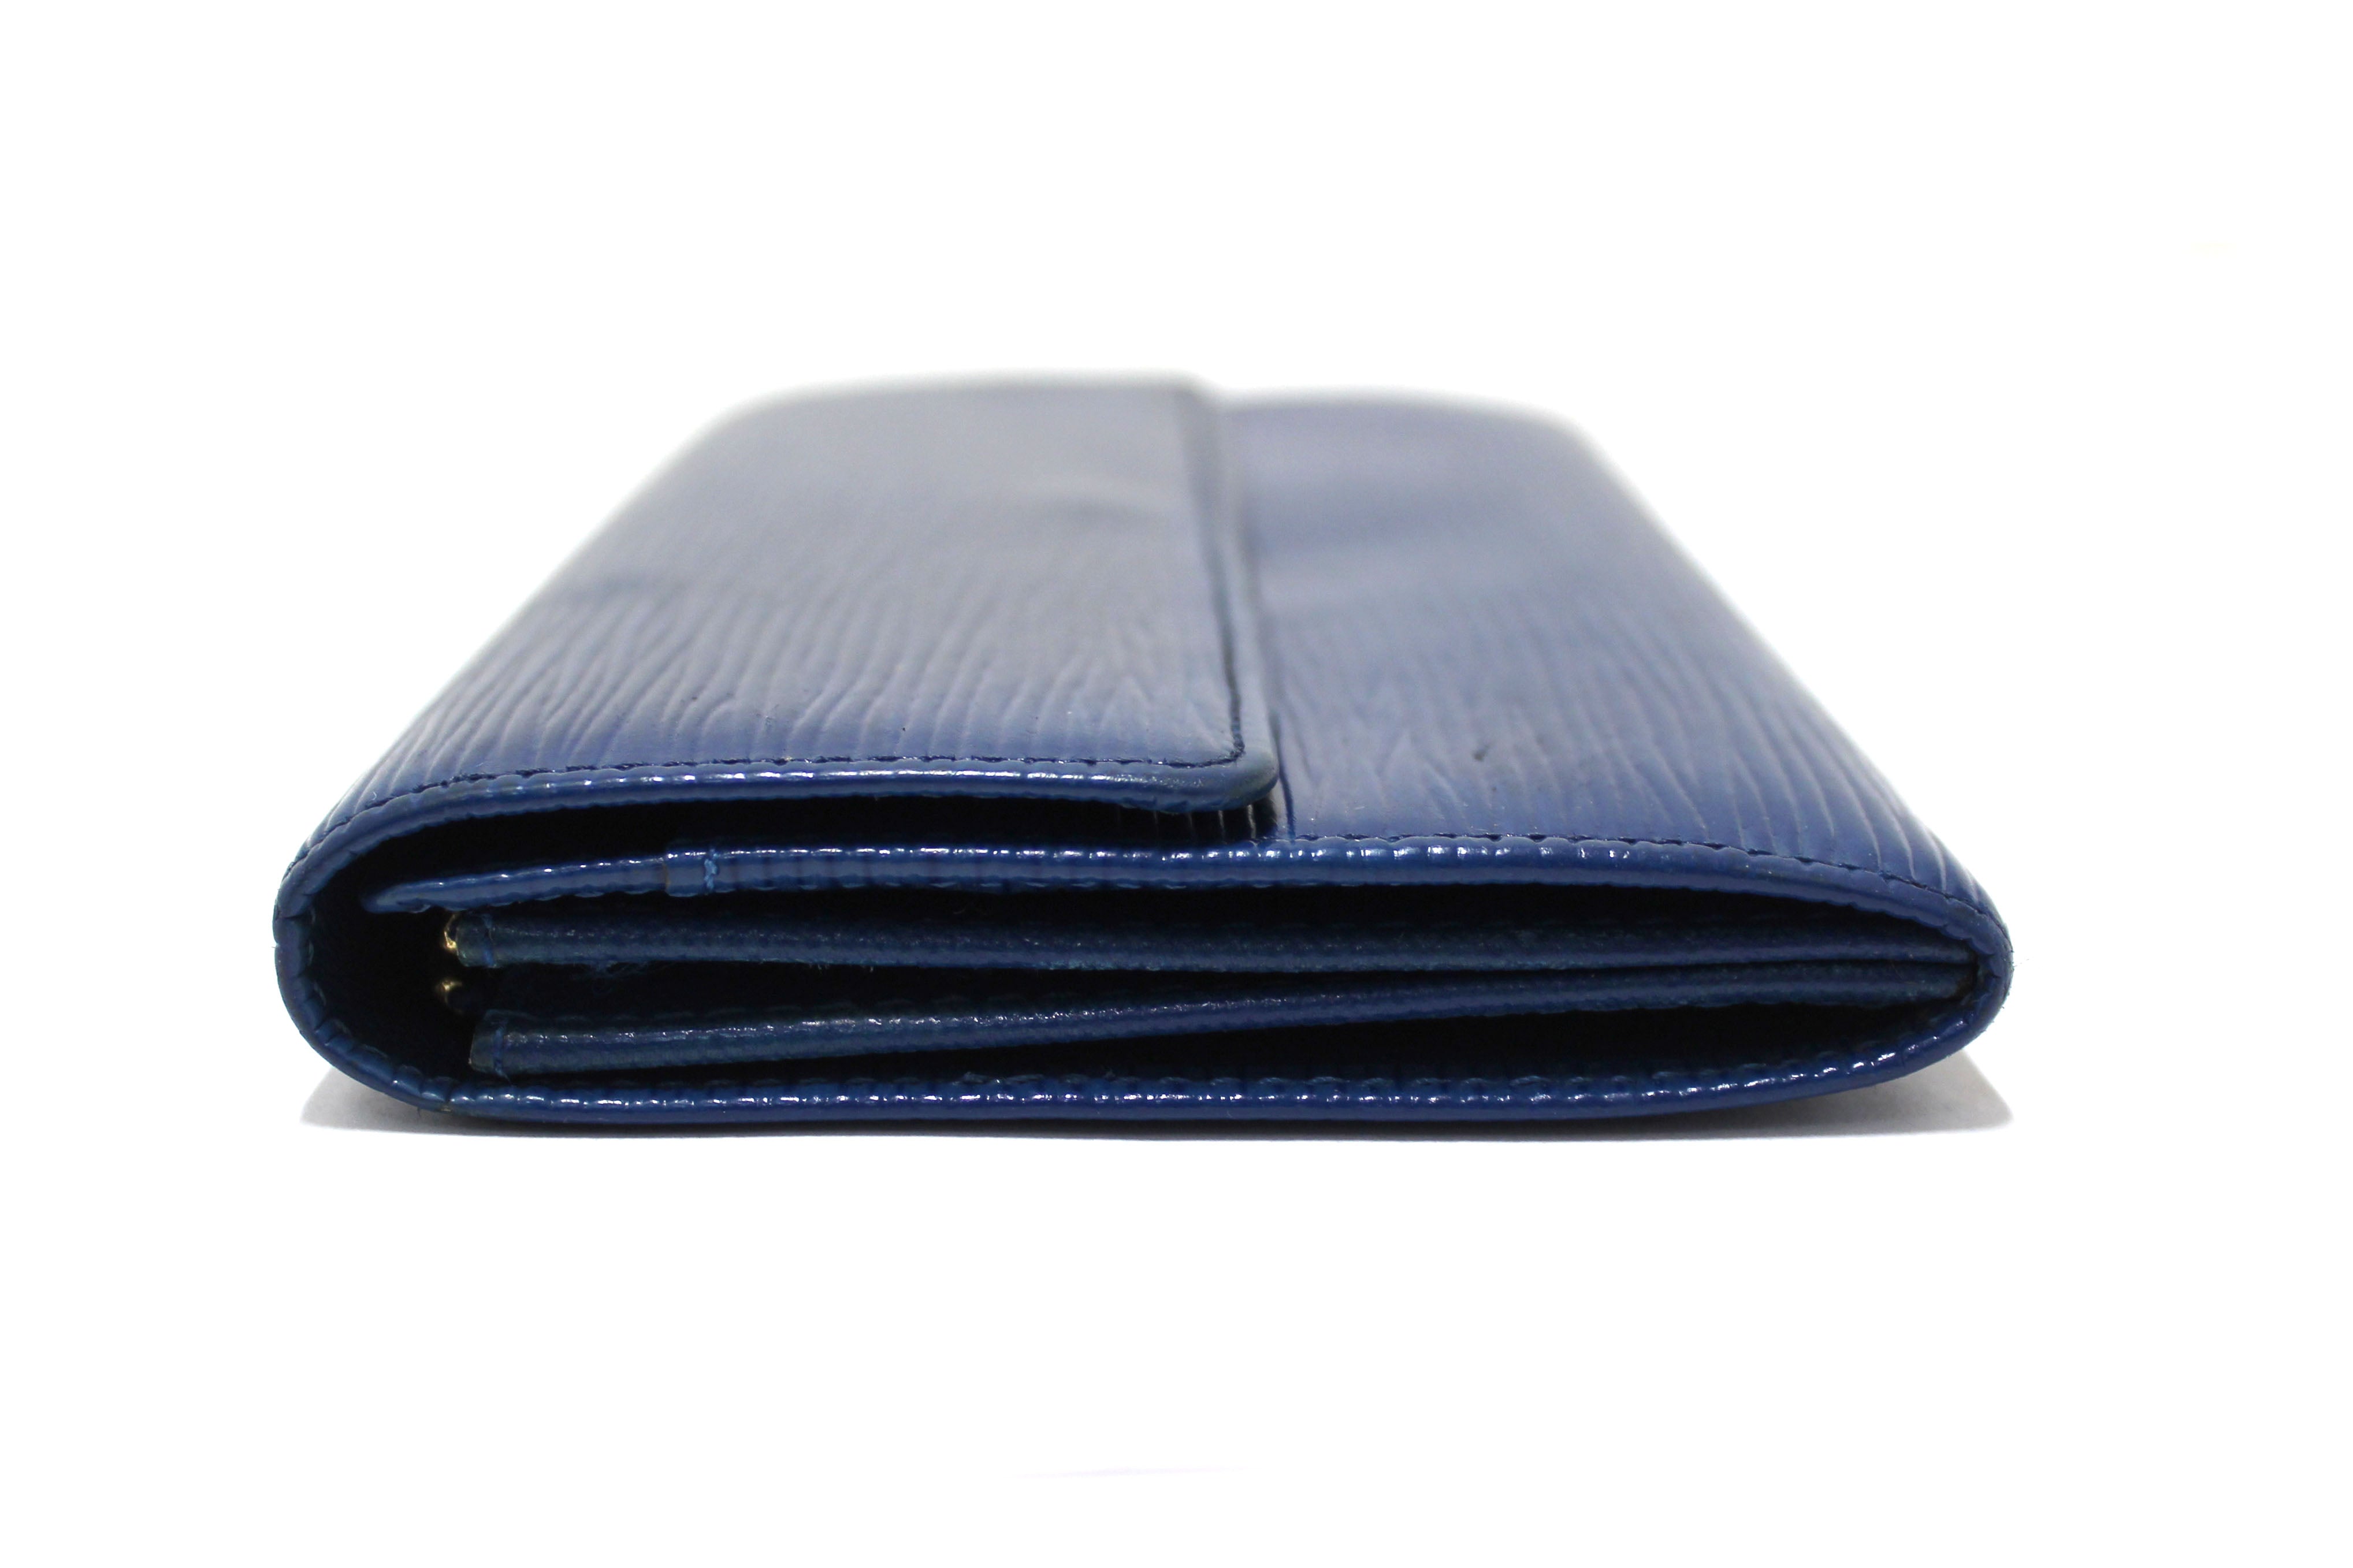 Sarah leather wallet